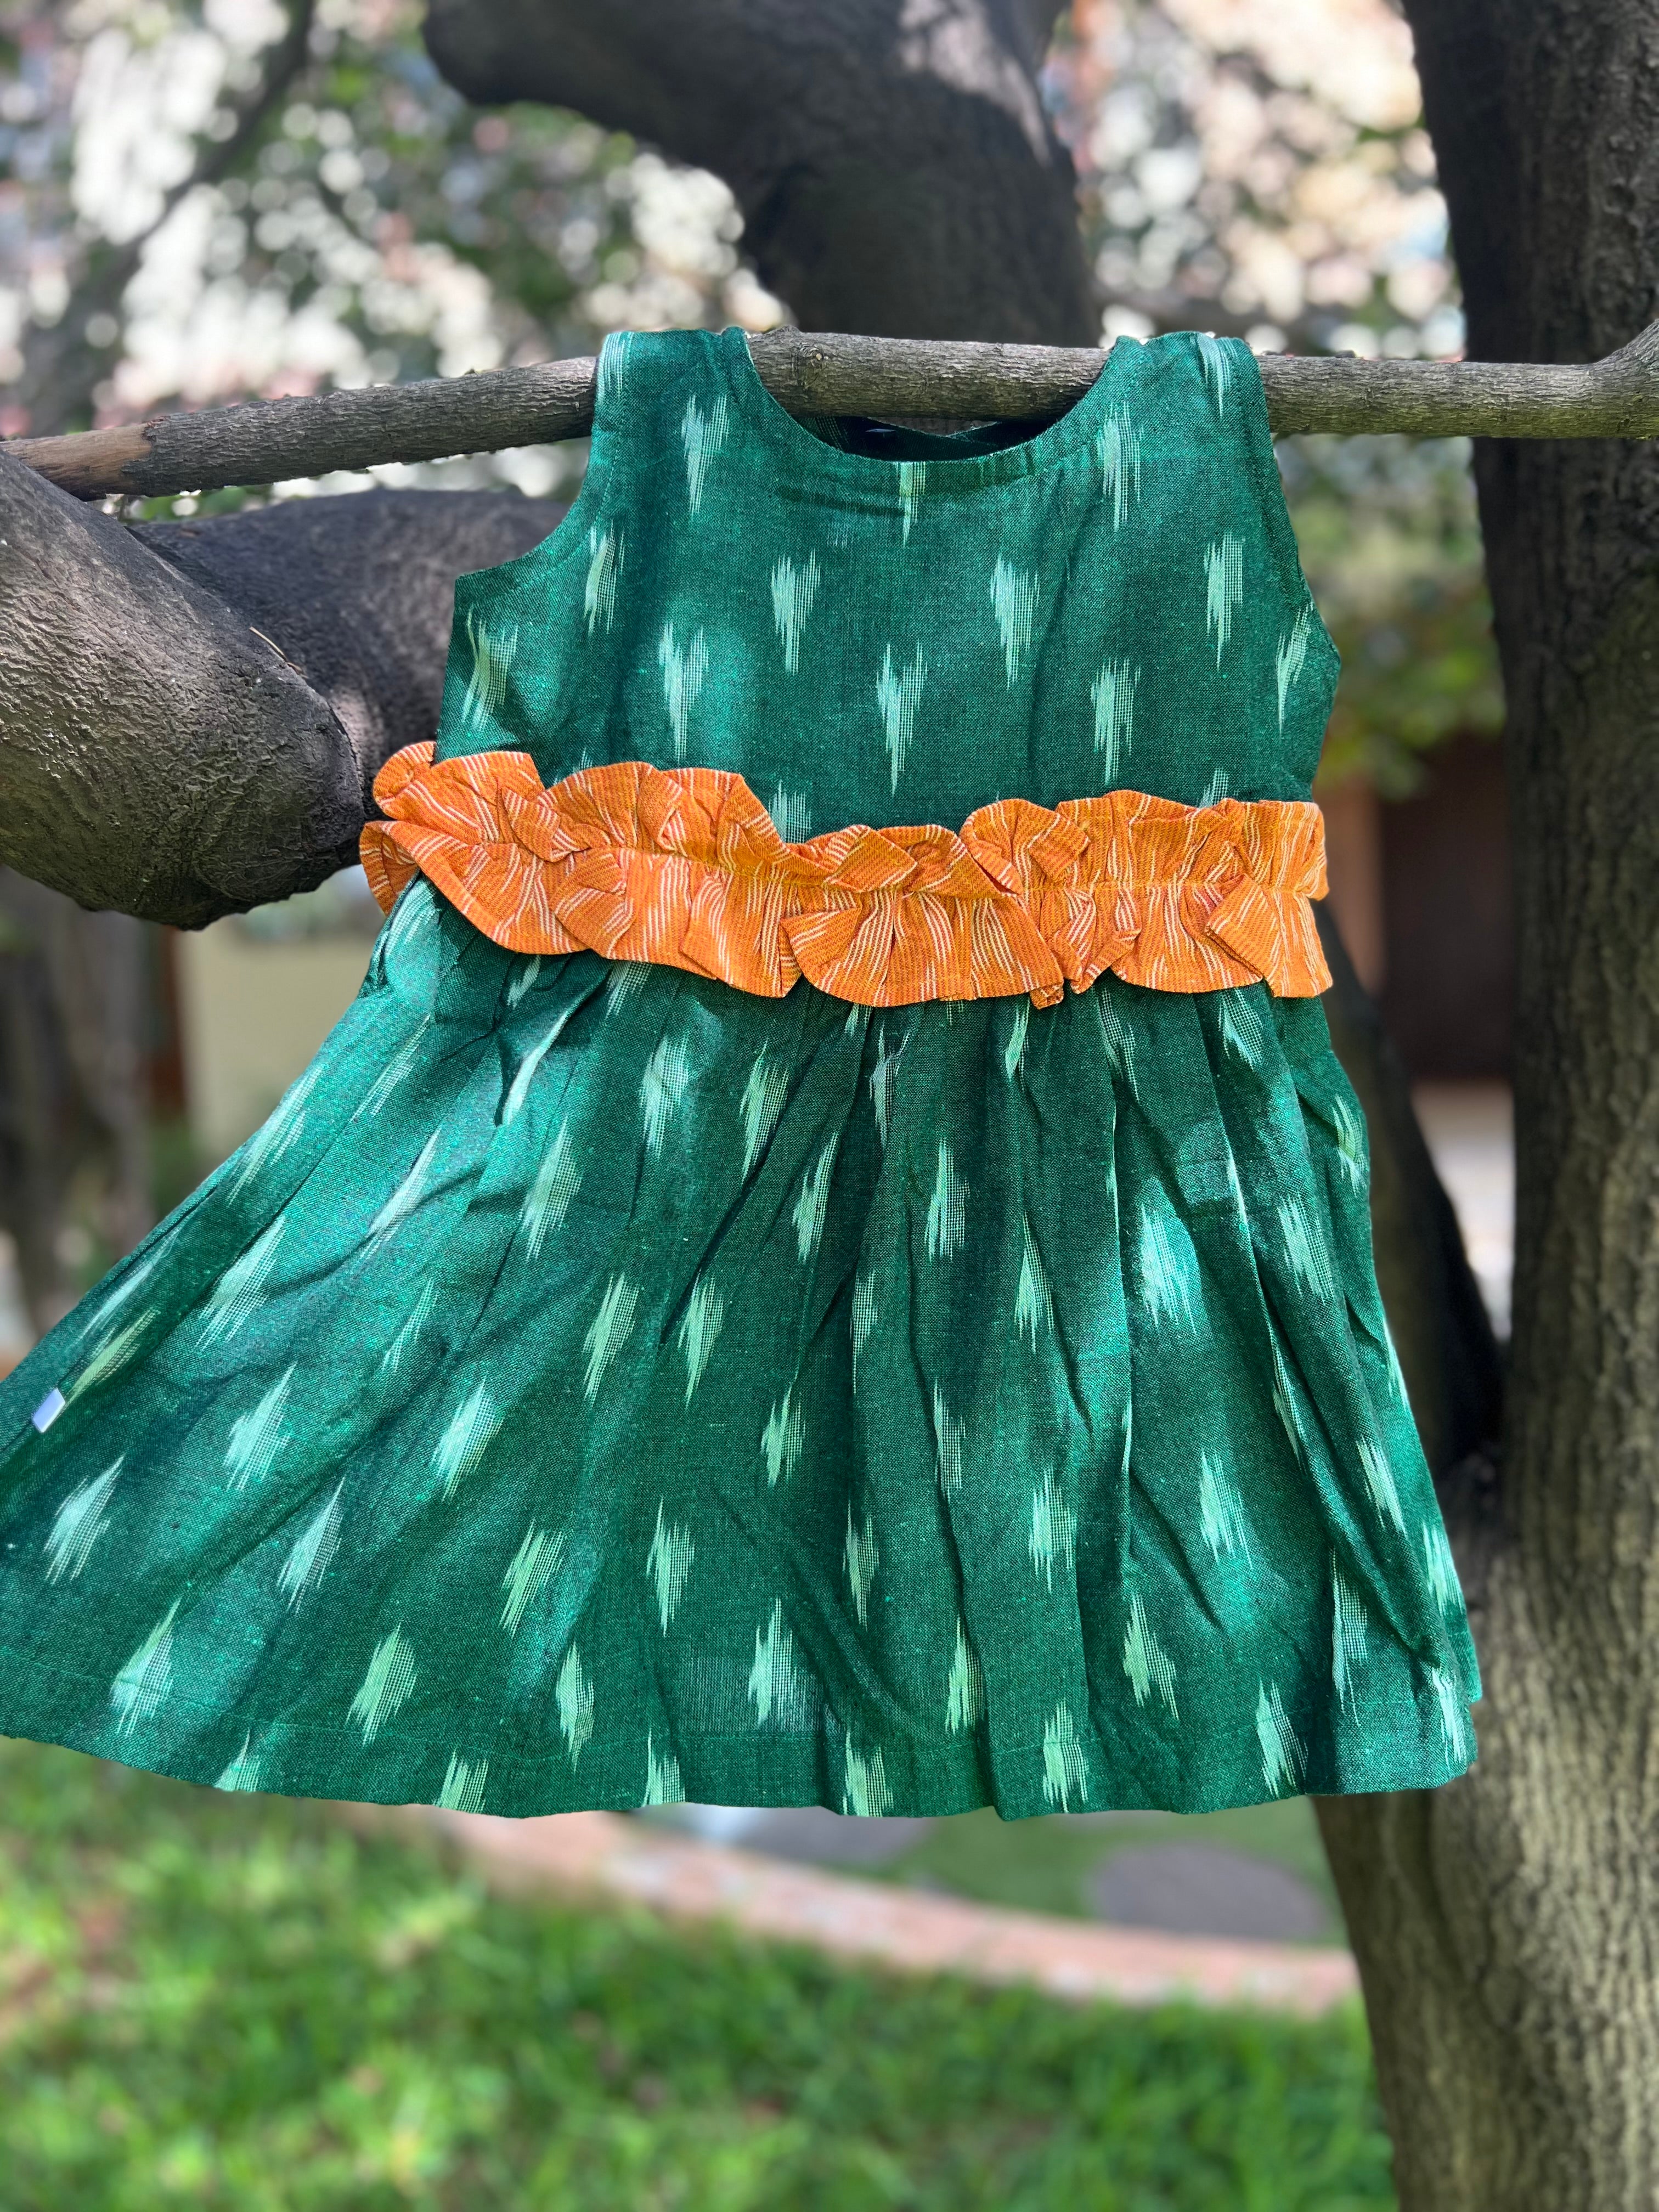 Whimsical Green Ikkat Dress with Orange Ruffles